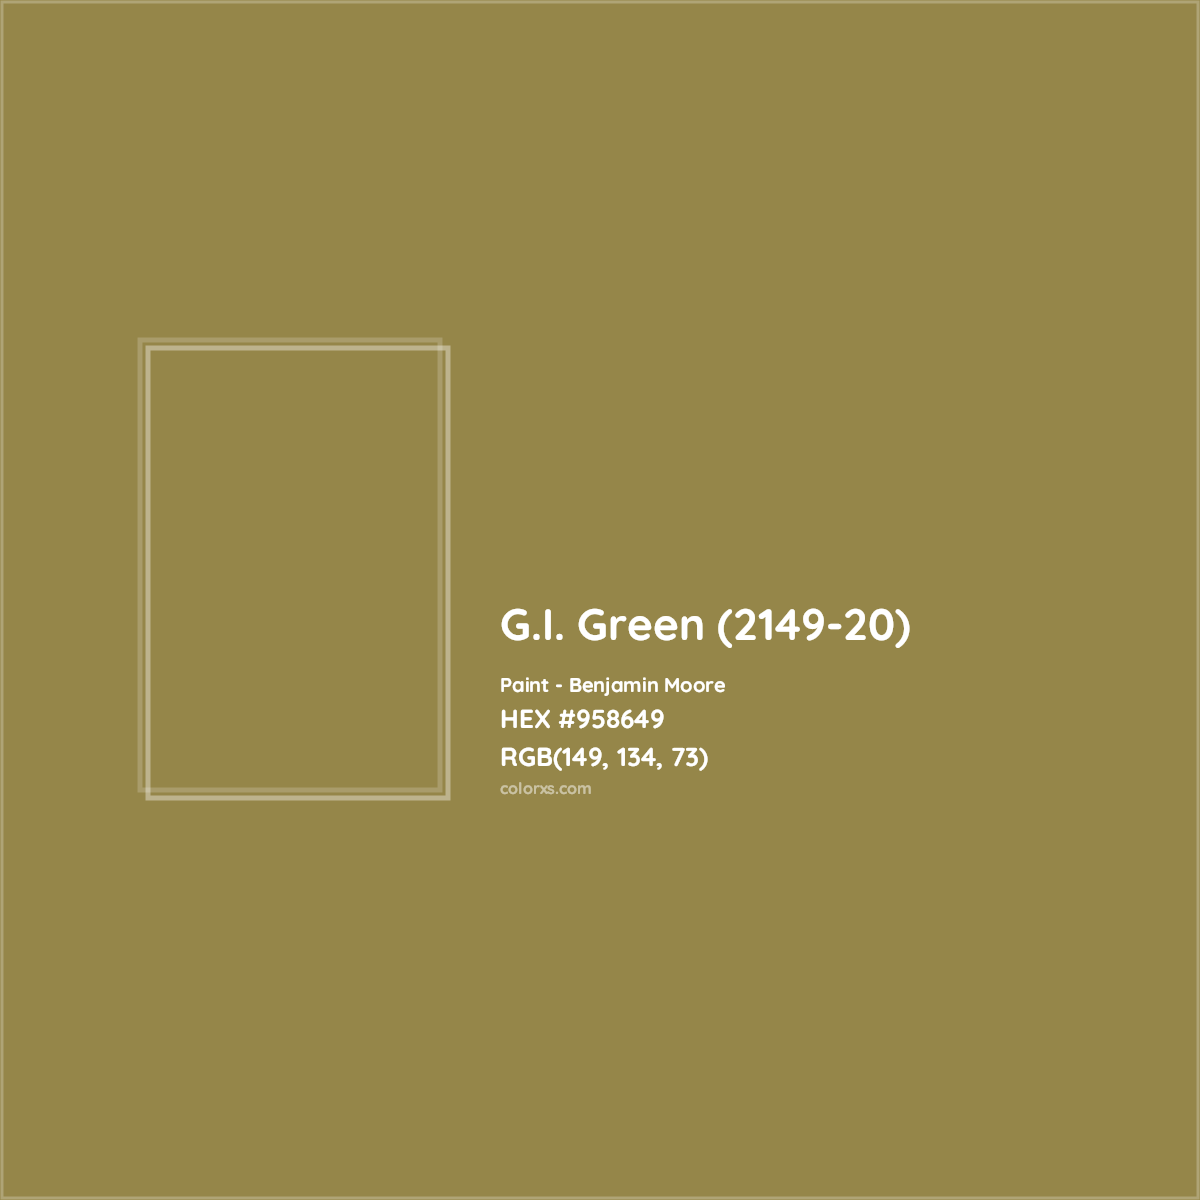 HEX #958649 G.I. Green (2149-20) Paint Benjamin Moore - Color Code